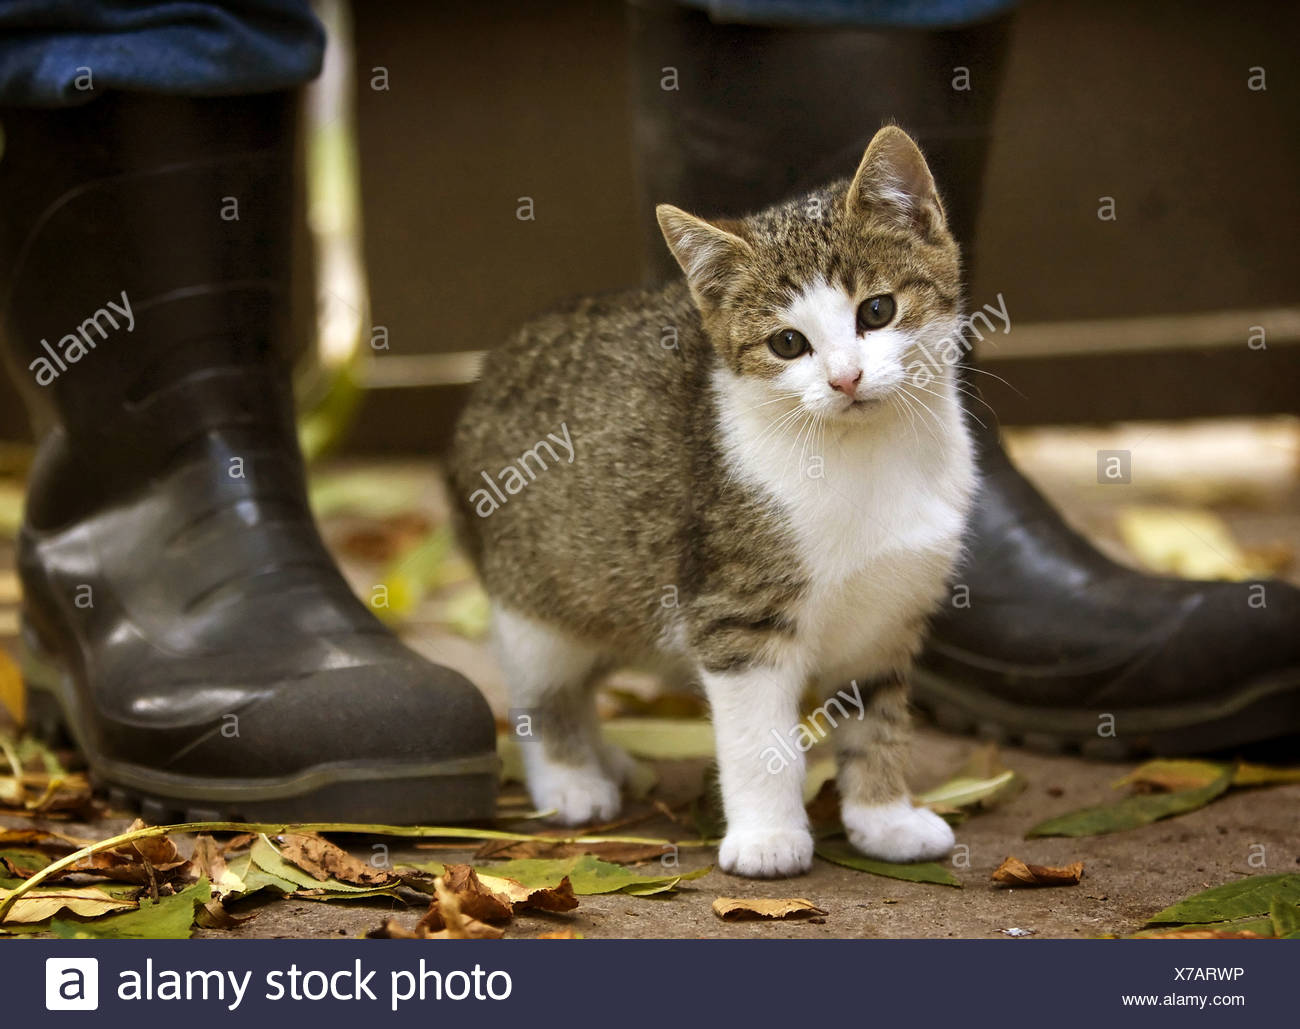 cat wearing rain boots